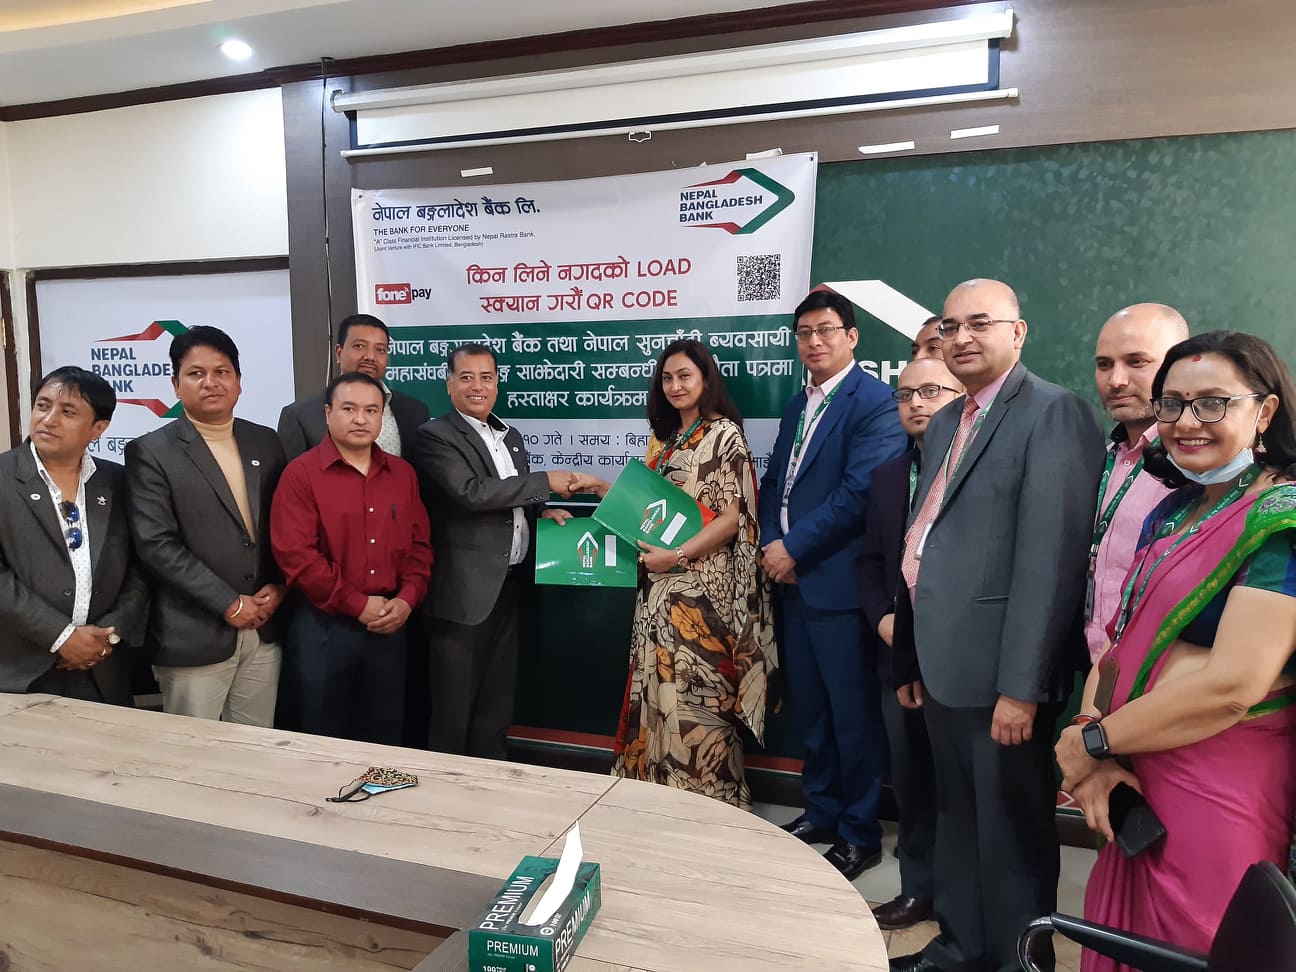 नेपाल सुनचाँदी ब्यवसायी महासंघ र नेपाल बंगलादेश बैंक वीच बैंकिङ साझेदारी सम्वन्धी सम्झौता